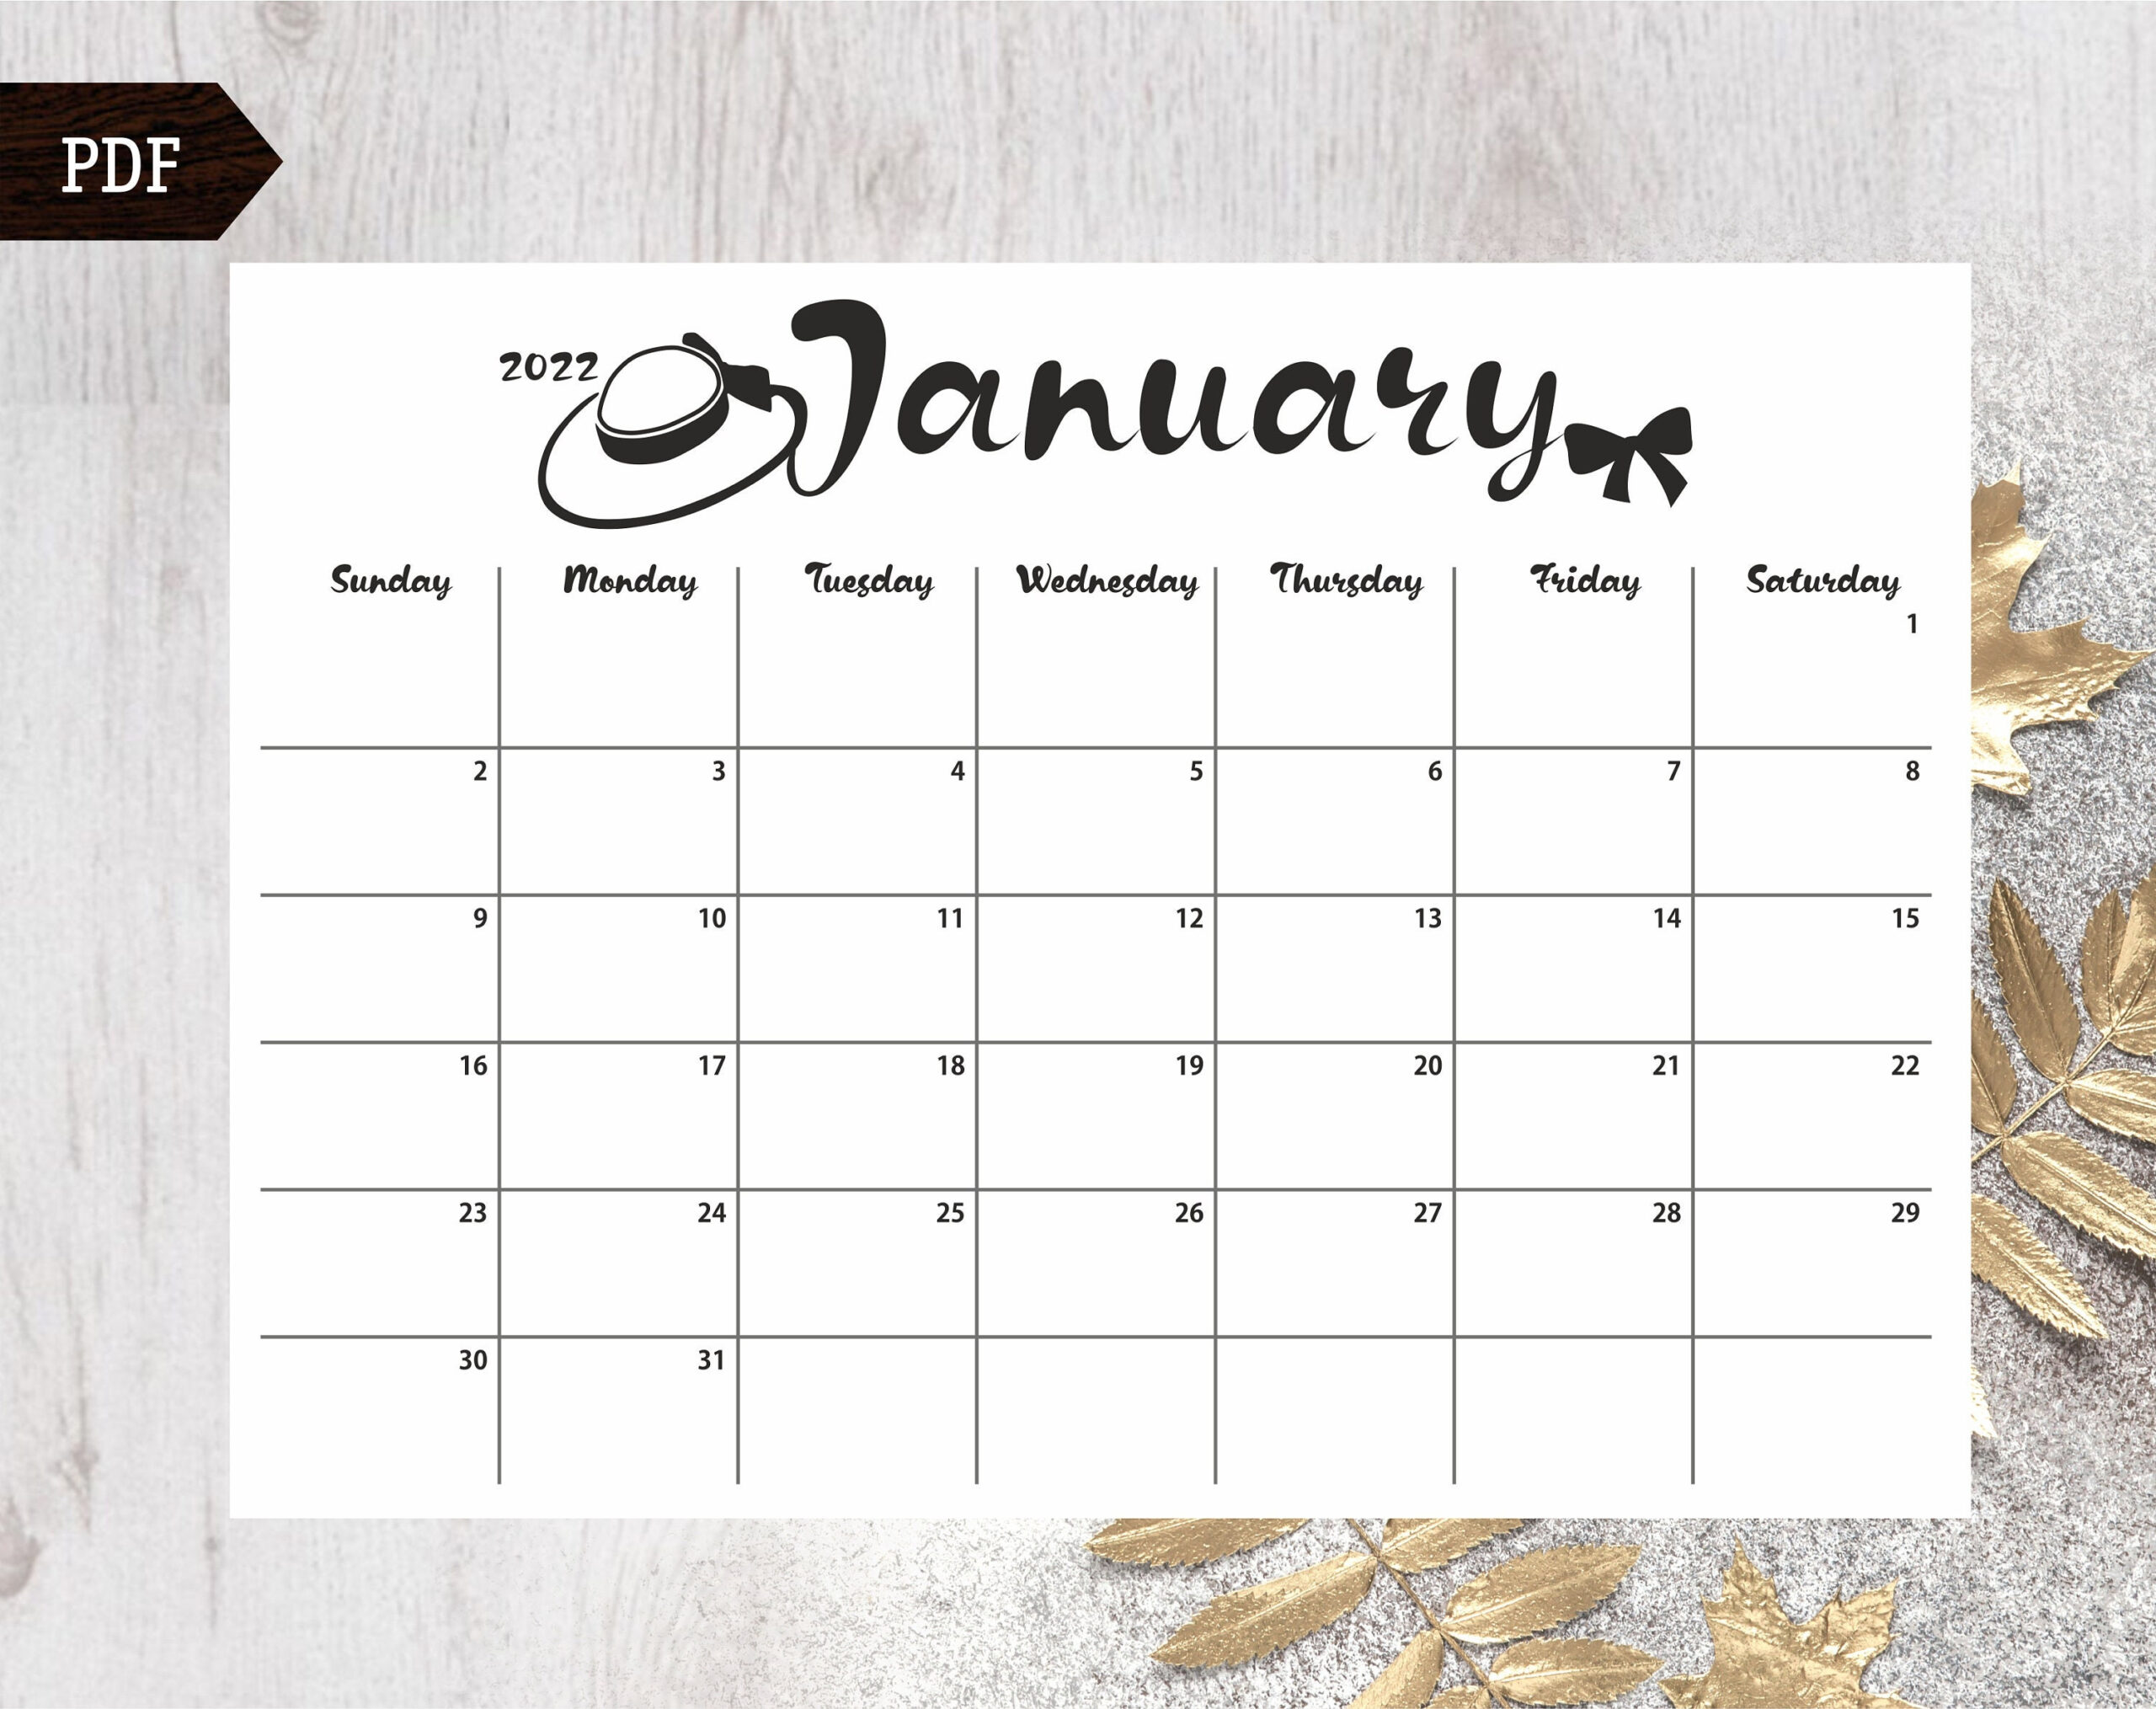 2022 White Calendar Wall Calendar Yearly Pdf Wall Calendar  Free Calendar Template 2022 Zoom